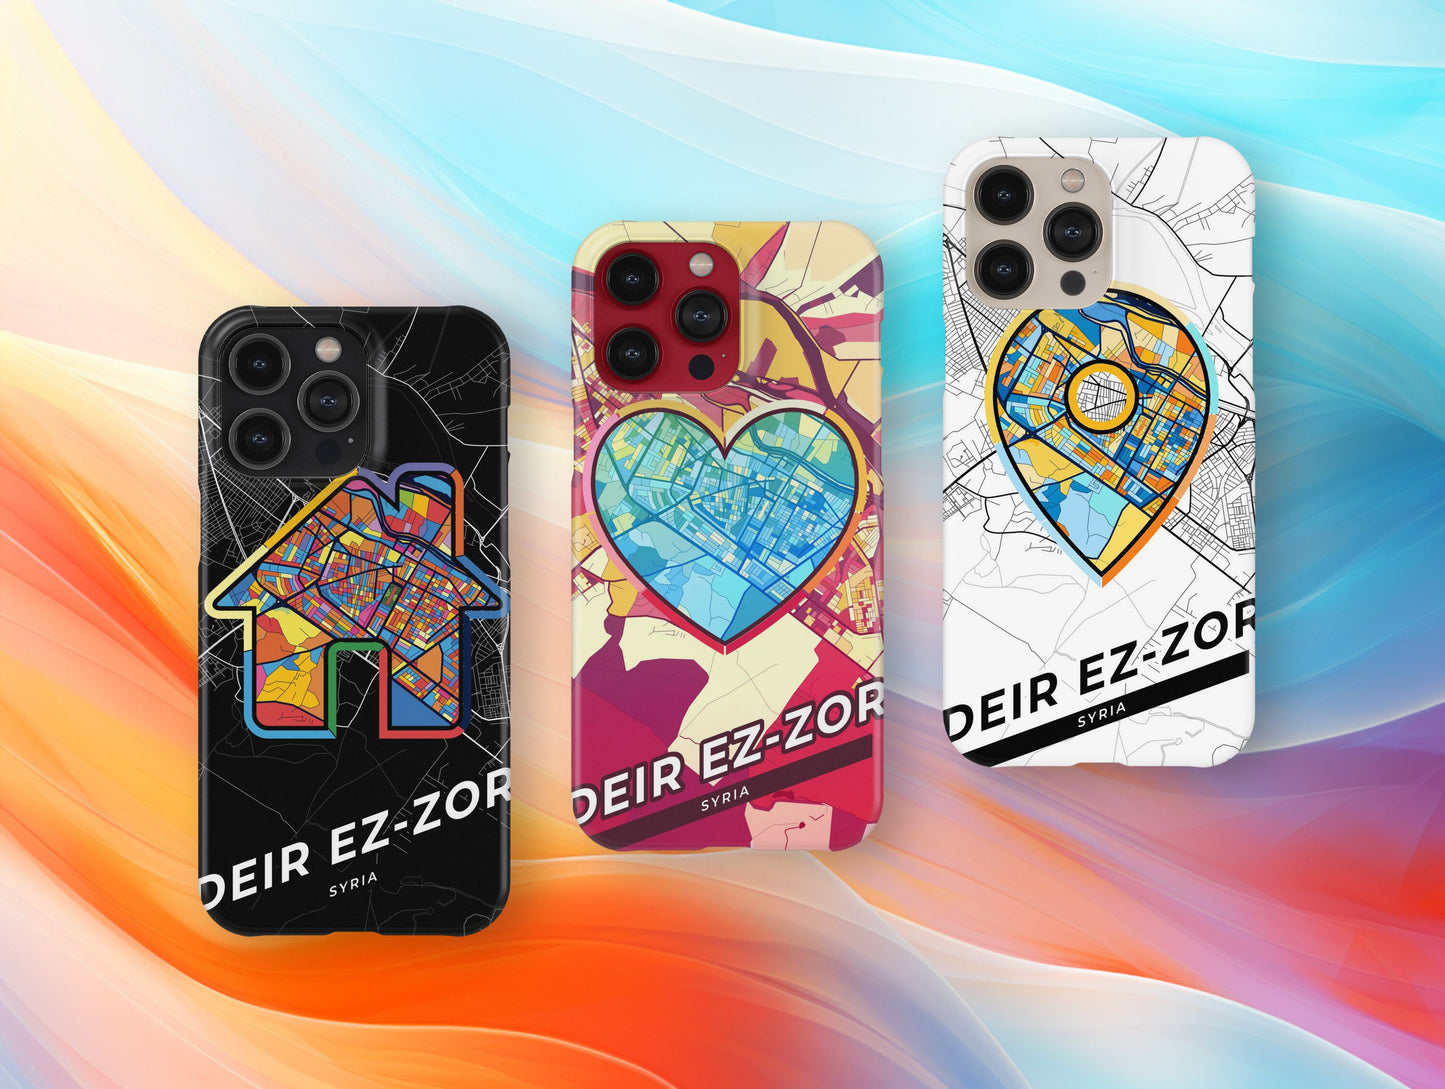 Deir Ez-Zor Syria slim phone case with colorful icon. Birthday, wedding or housewarming gift. Couple match cases.